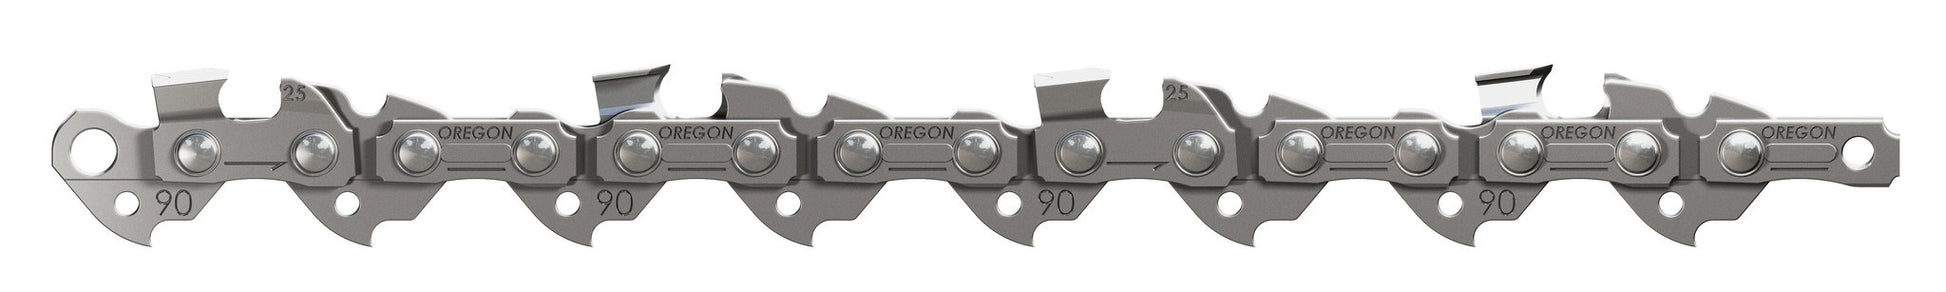 90PX045E - Oregon 90PX Chainsaw Chain - 45 Drive Links - NewSawChains